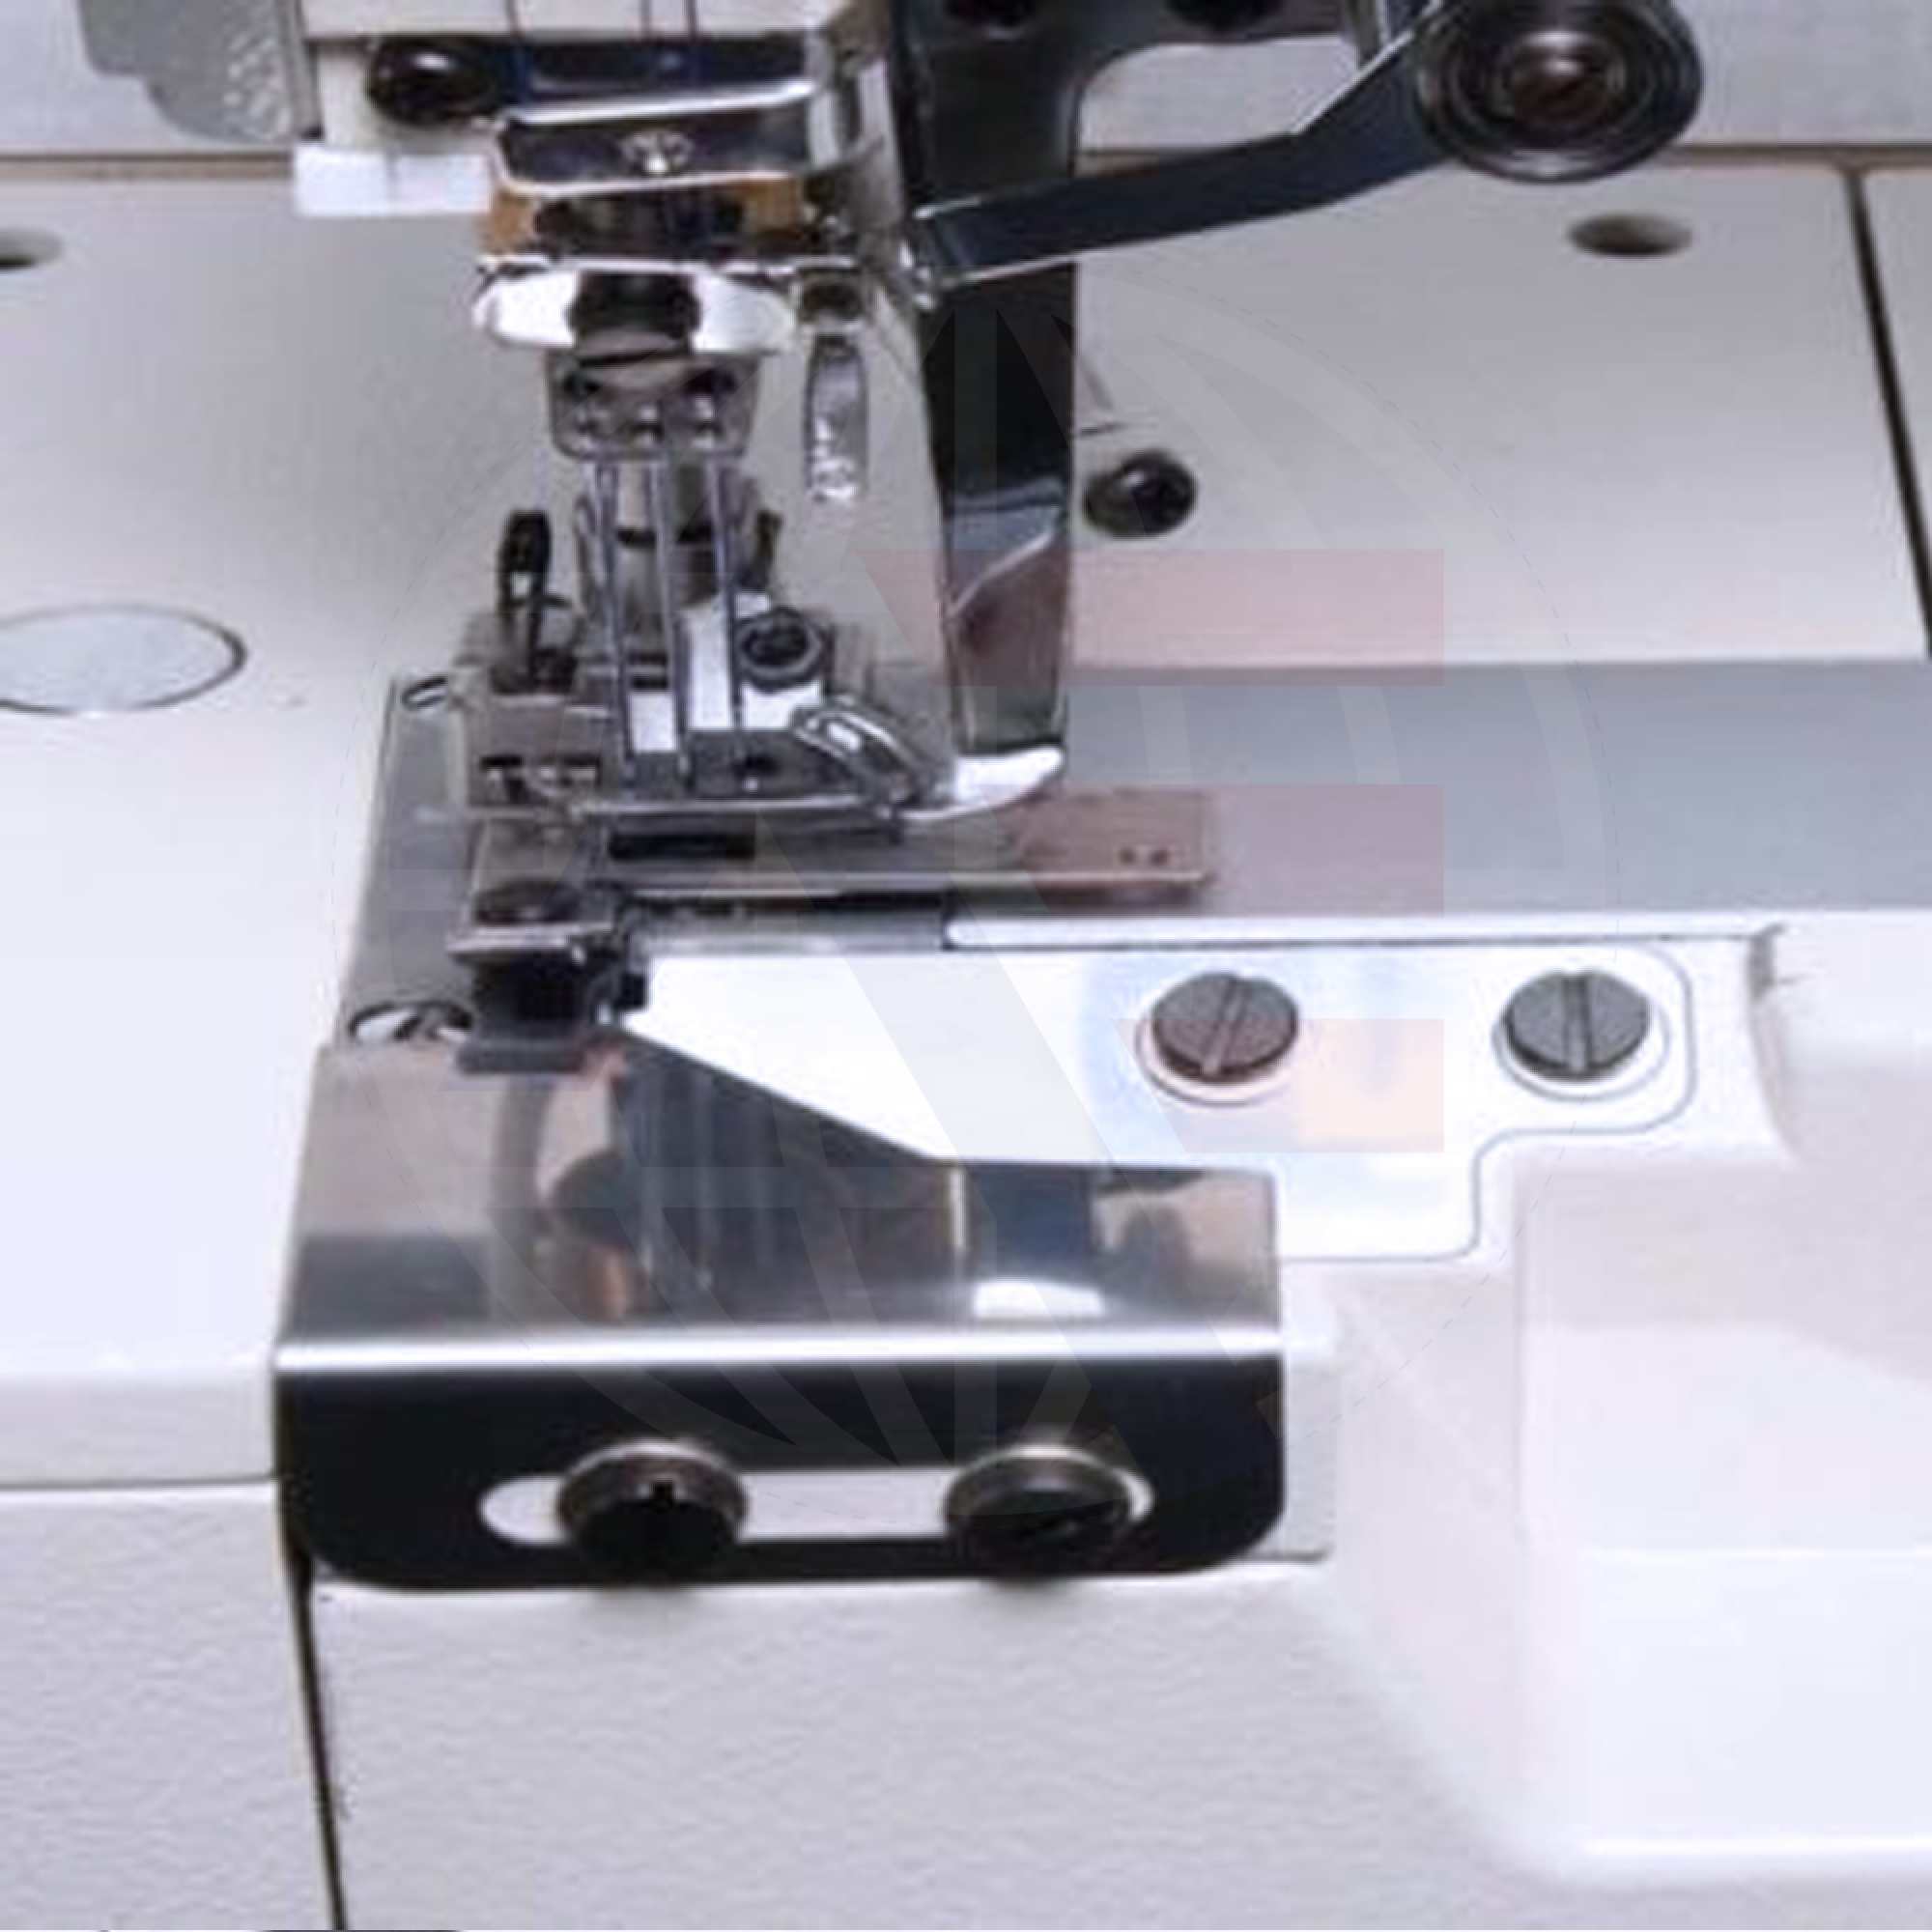 Global Fb 3600 Series Flat-Bed Coverstitch Machine Sewing Machines